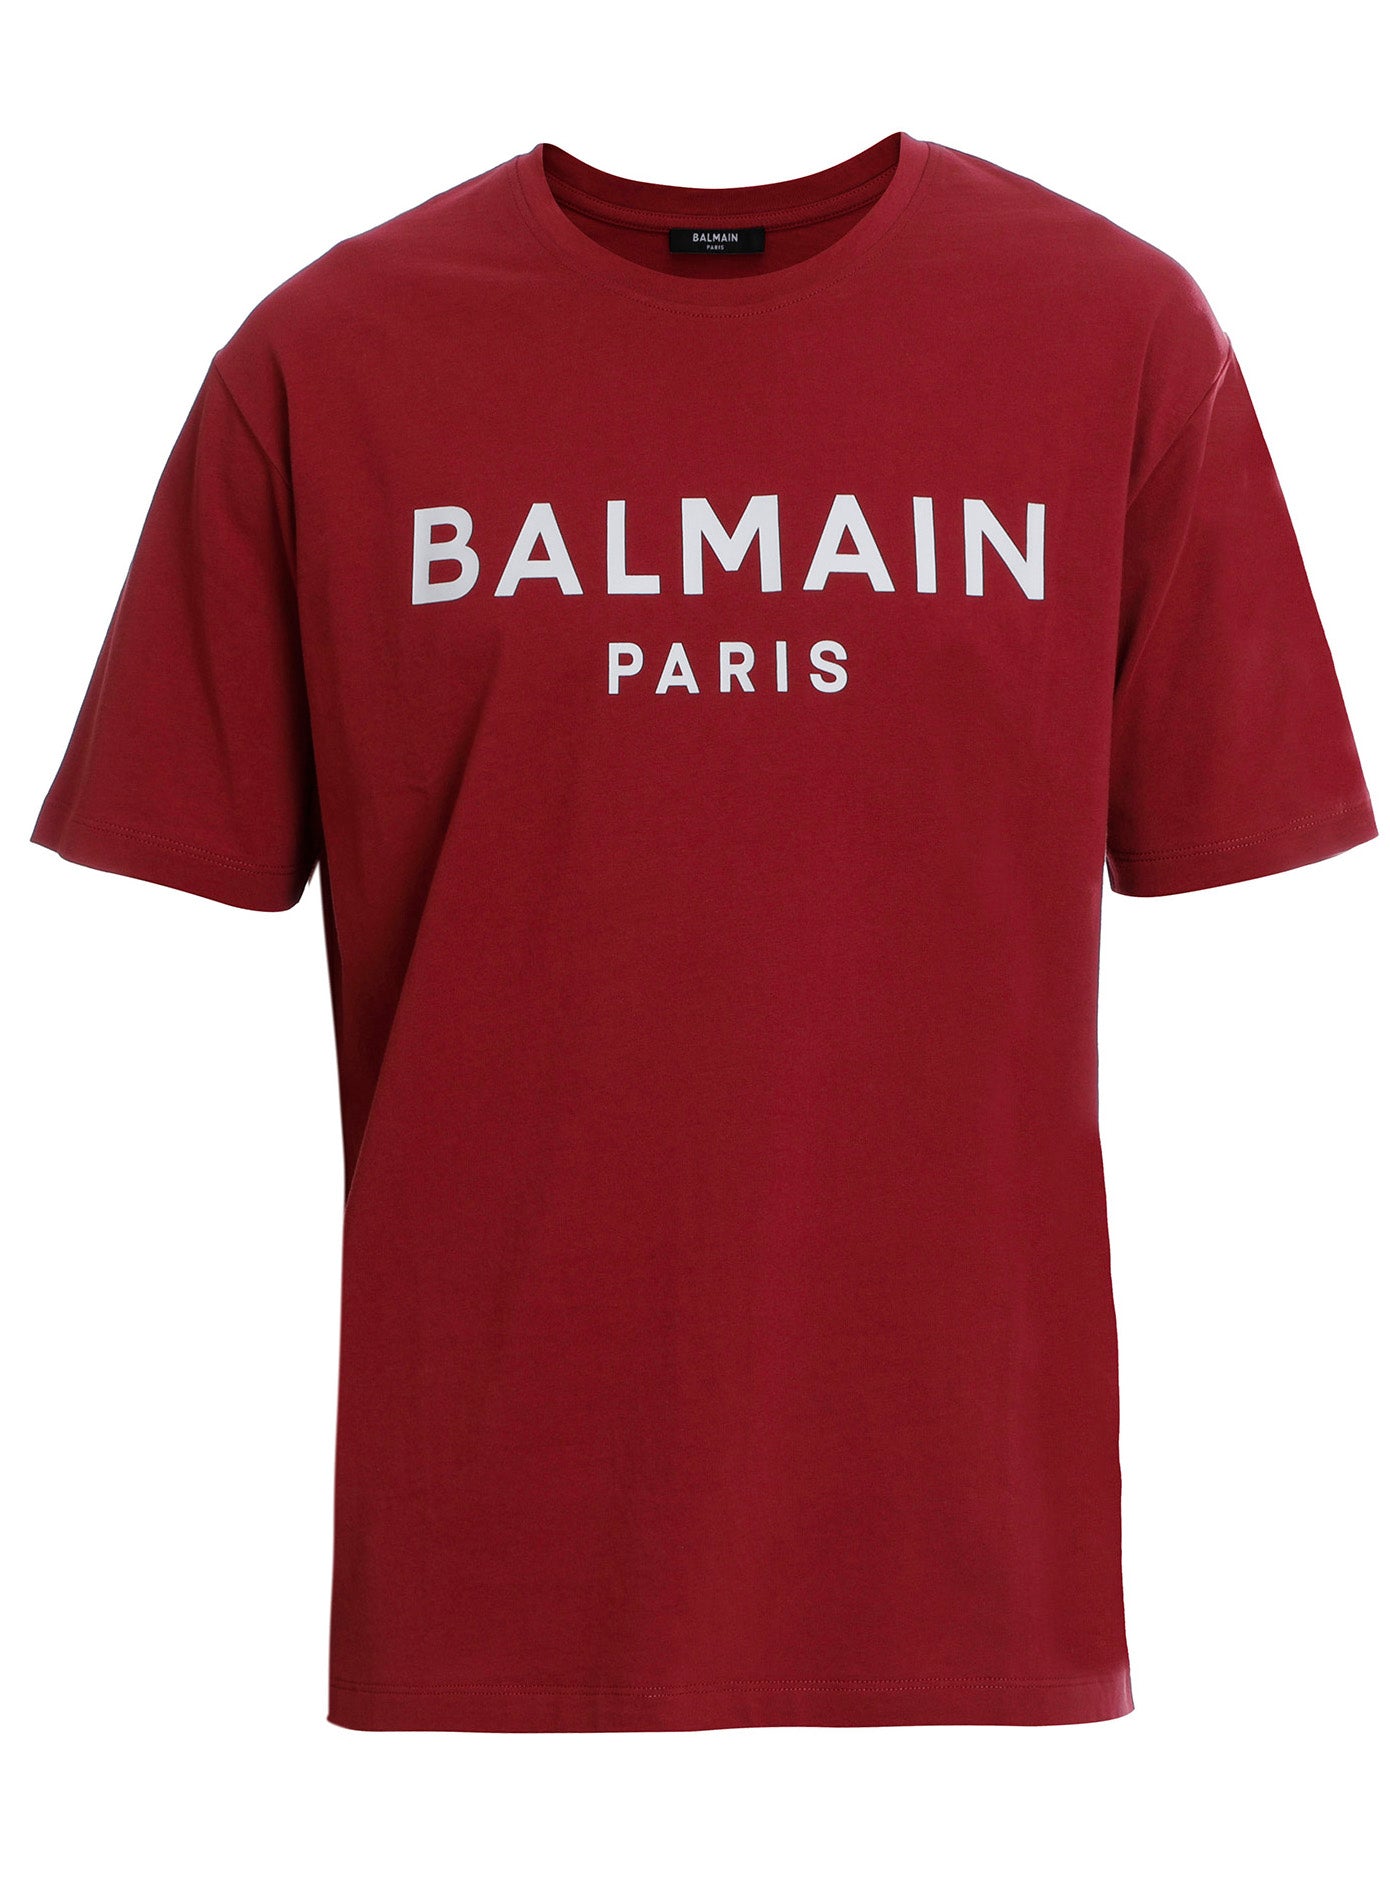 BALMAIN PRINTED T-SHIRT - RED